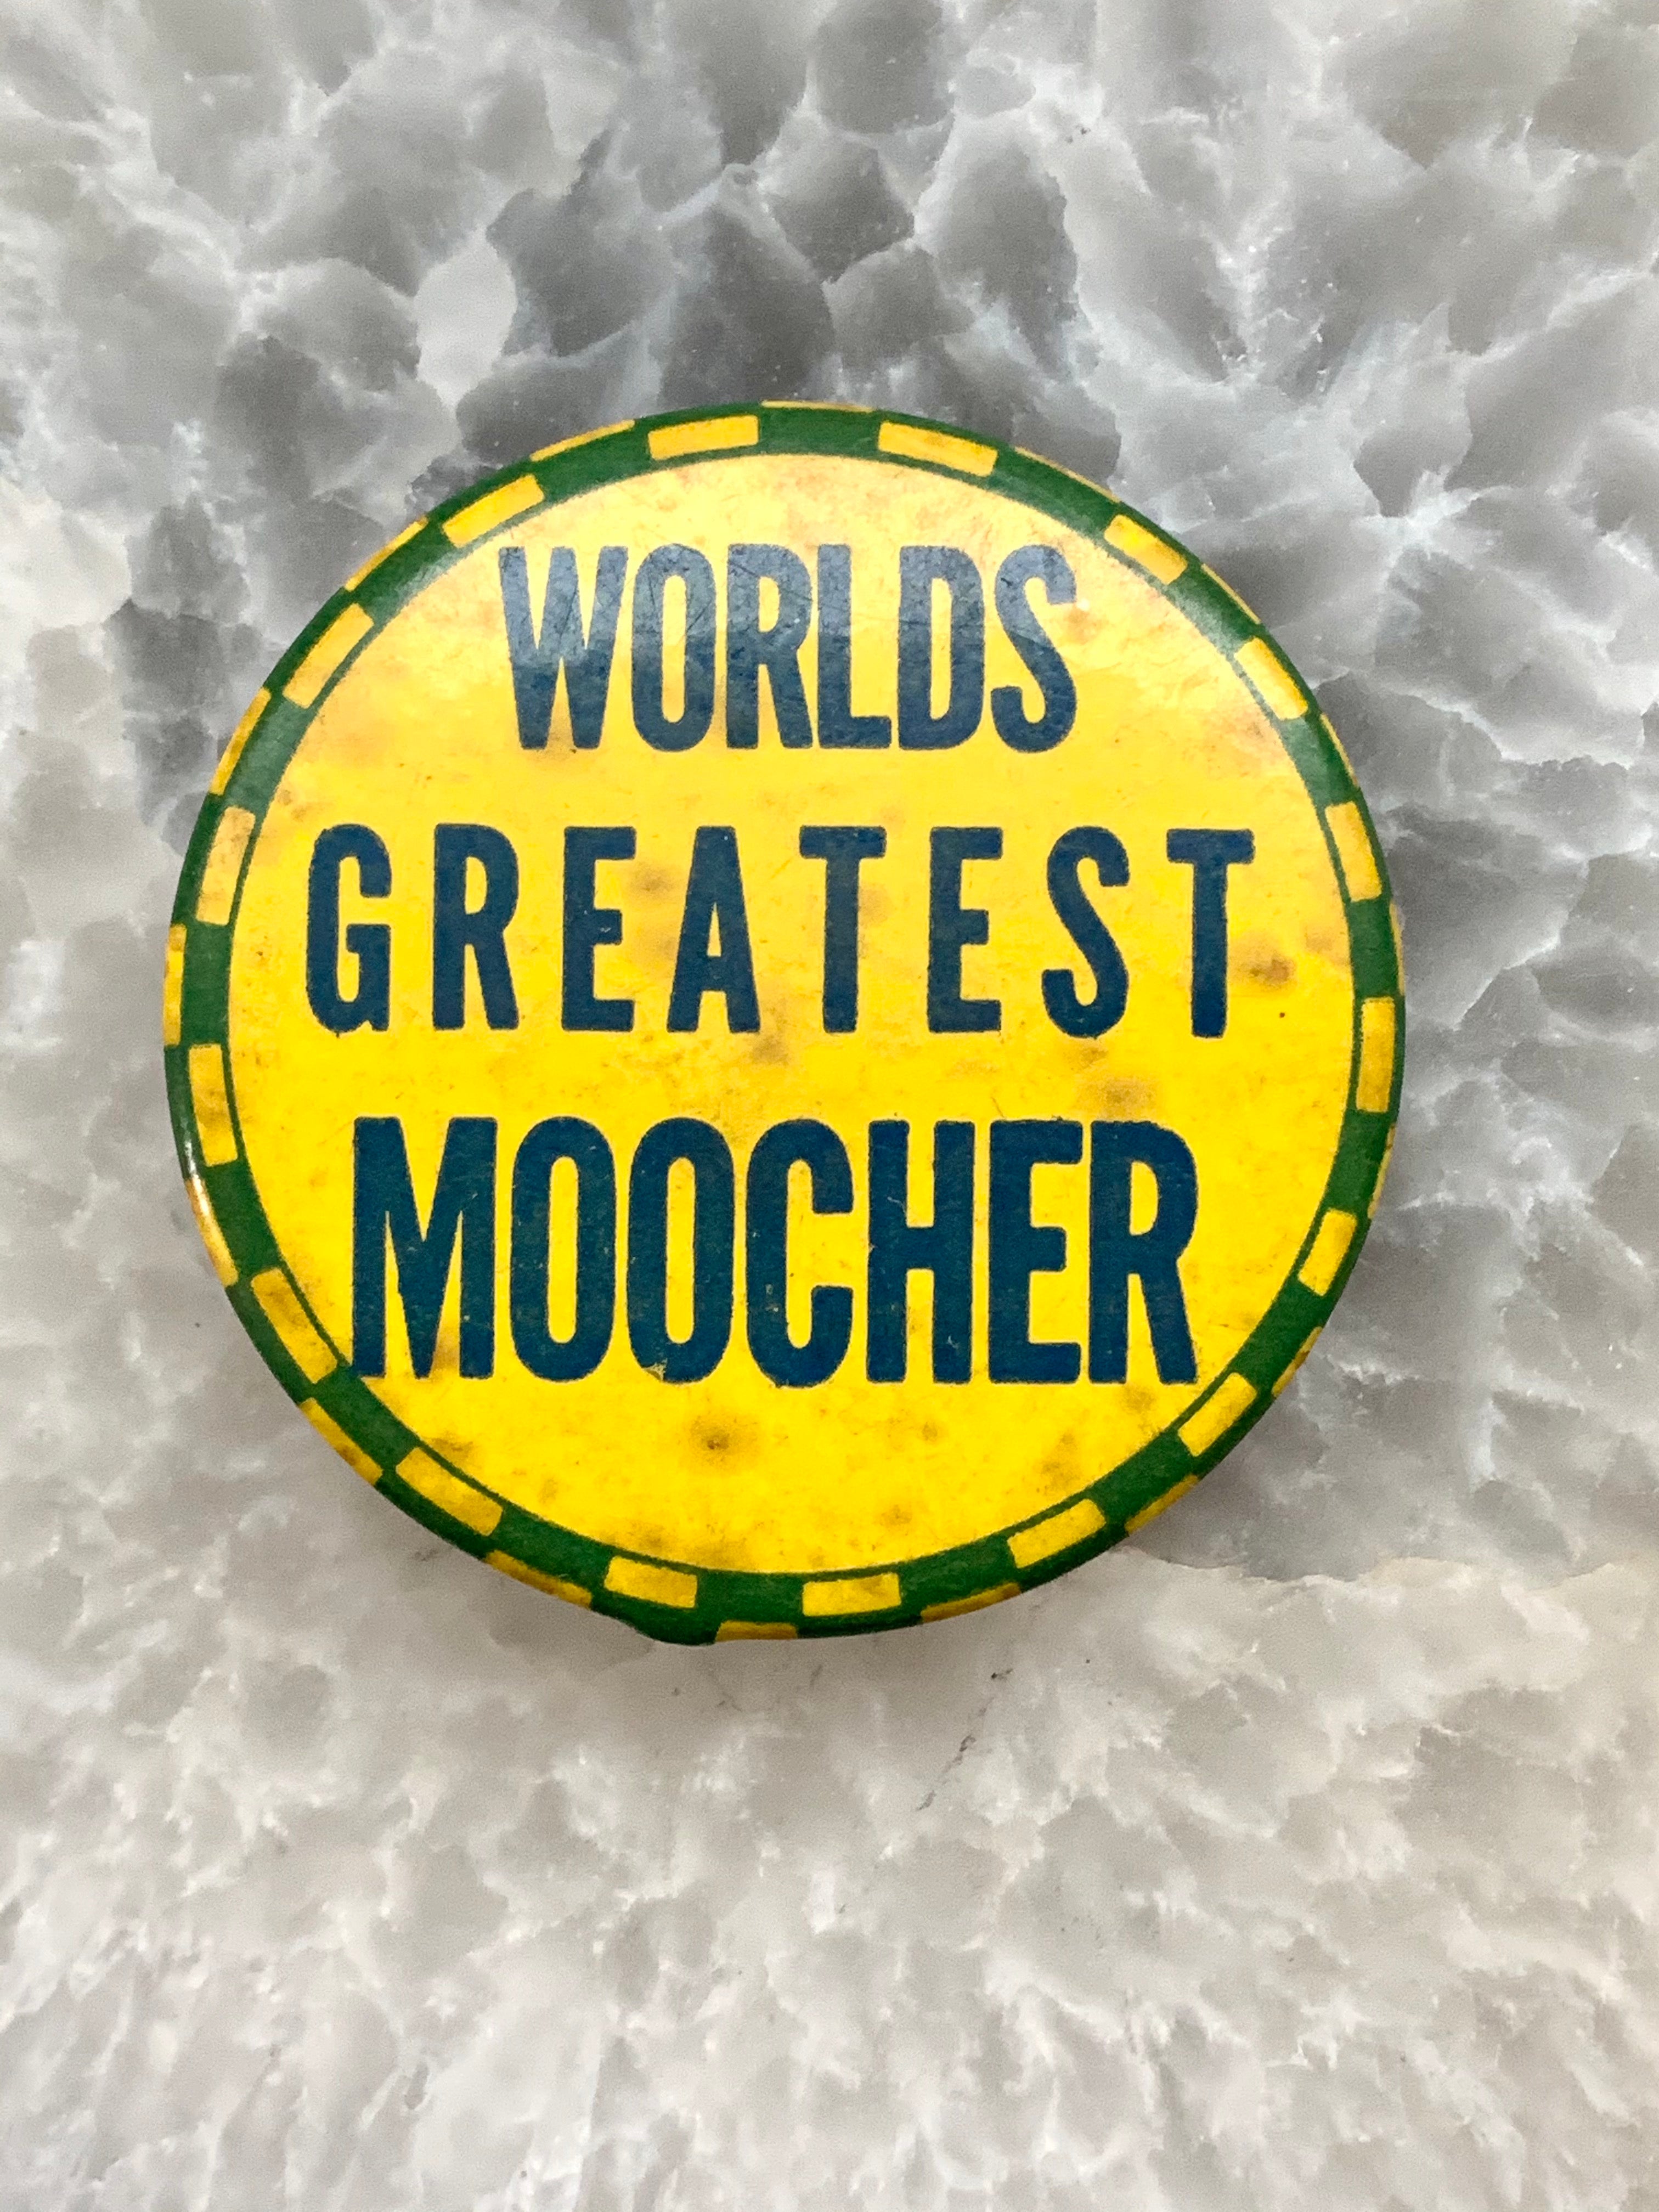 World's Greatest Moocher Retro Vintage Pinback Button; Yellow Accessories